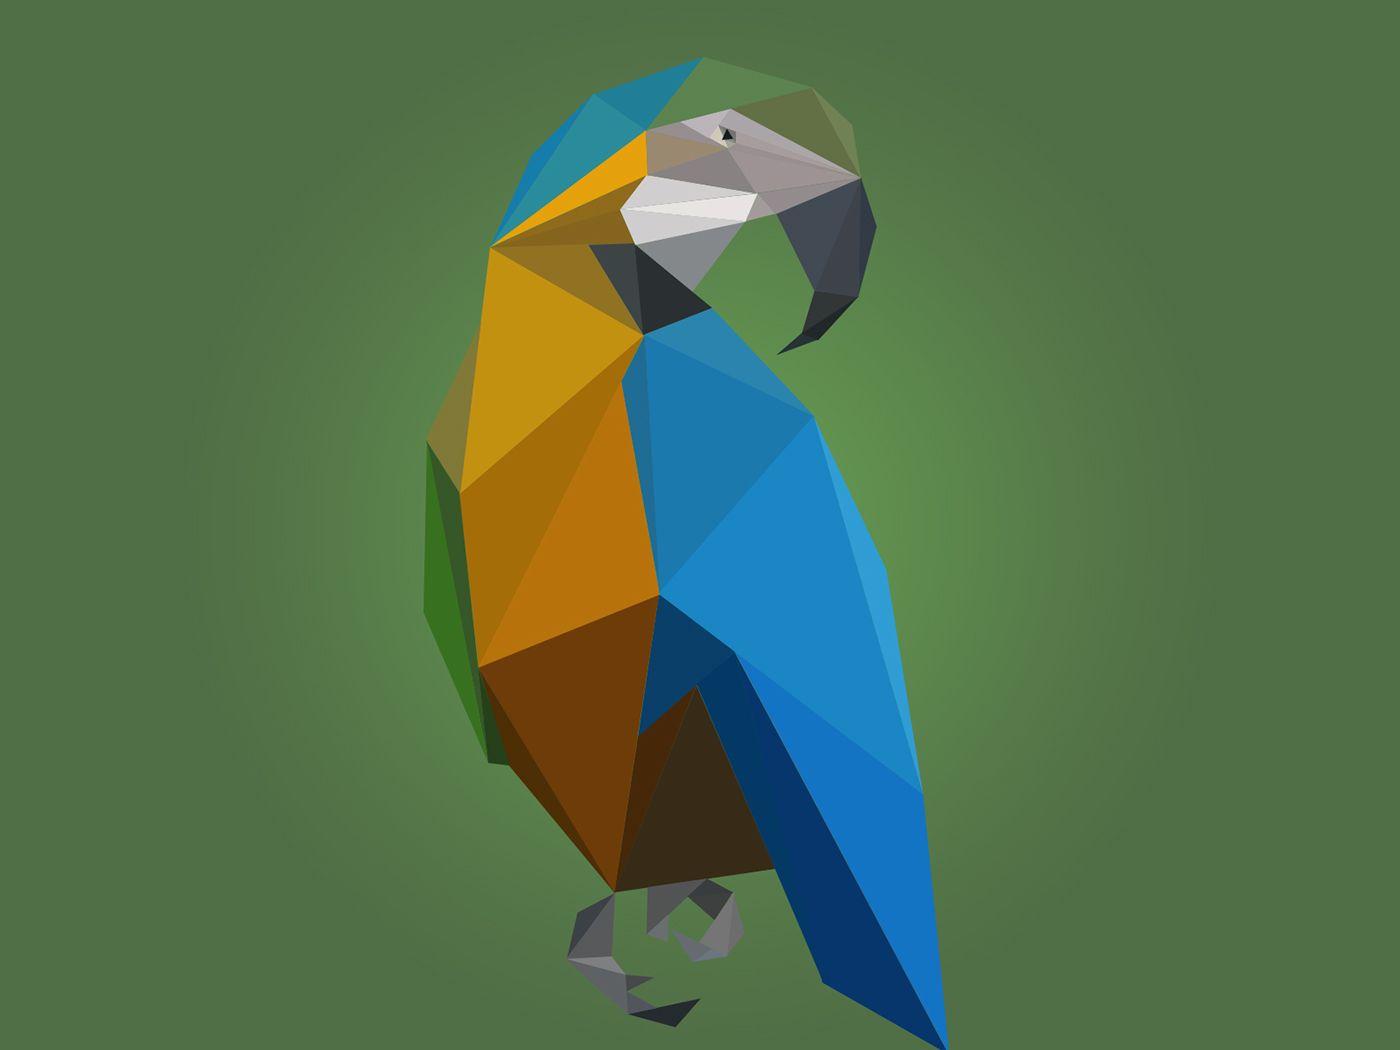 lowpoly LOW poly polygonal art digital parrot design ILLUSTRATION 